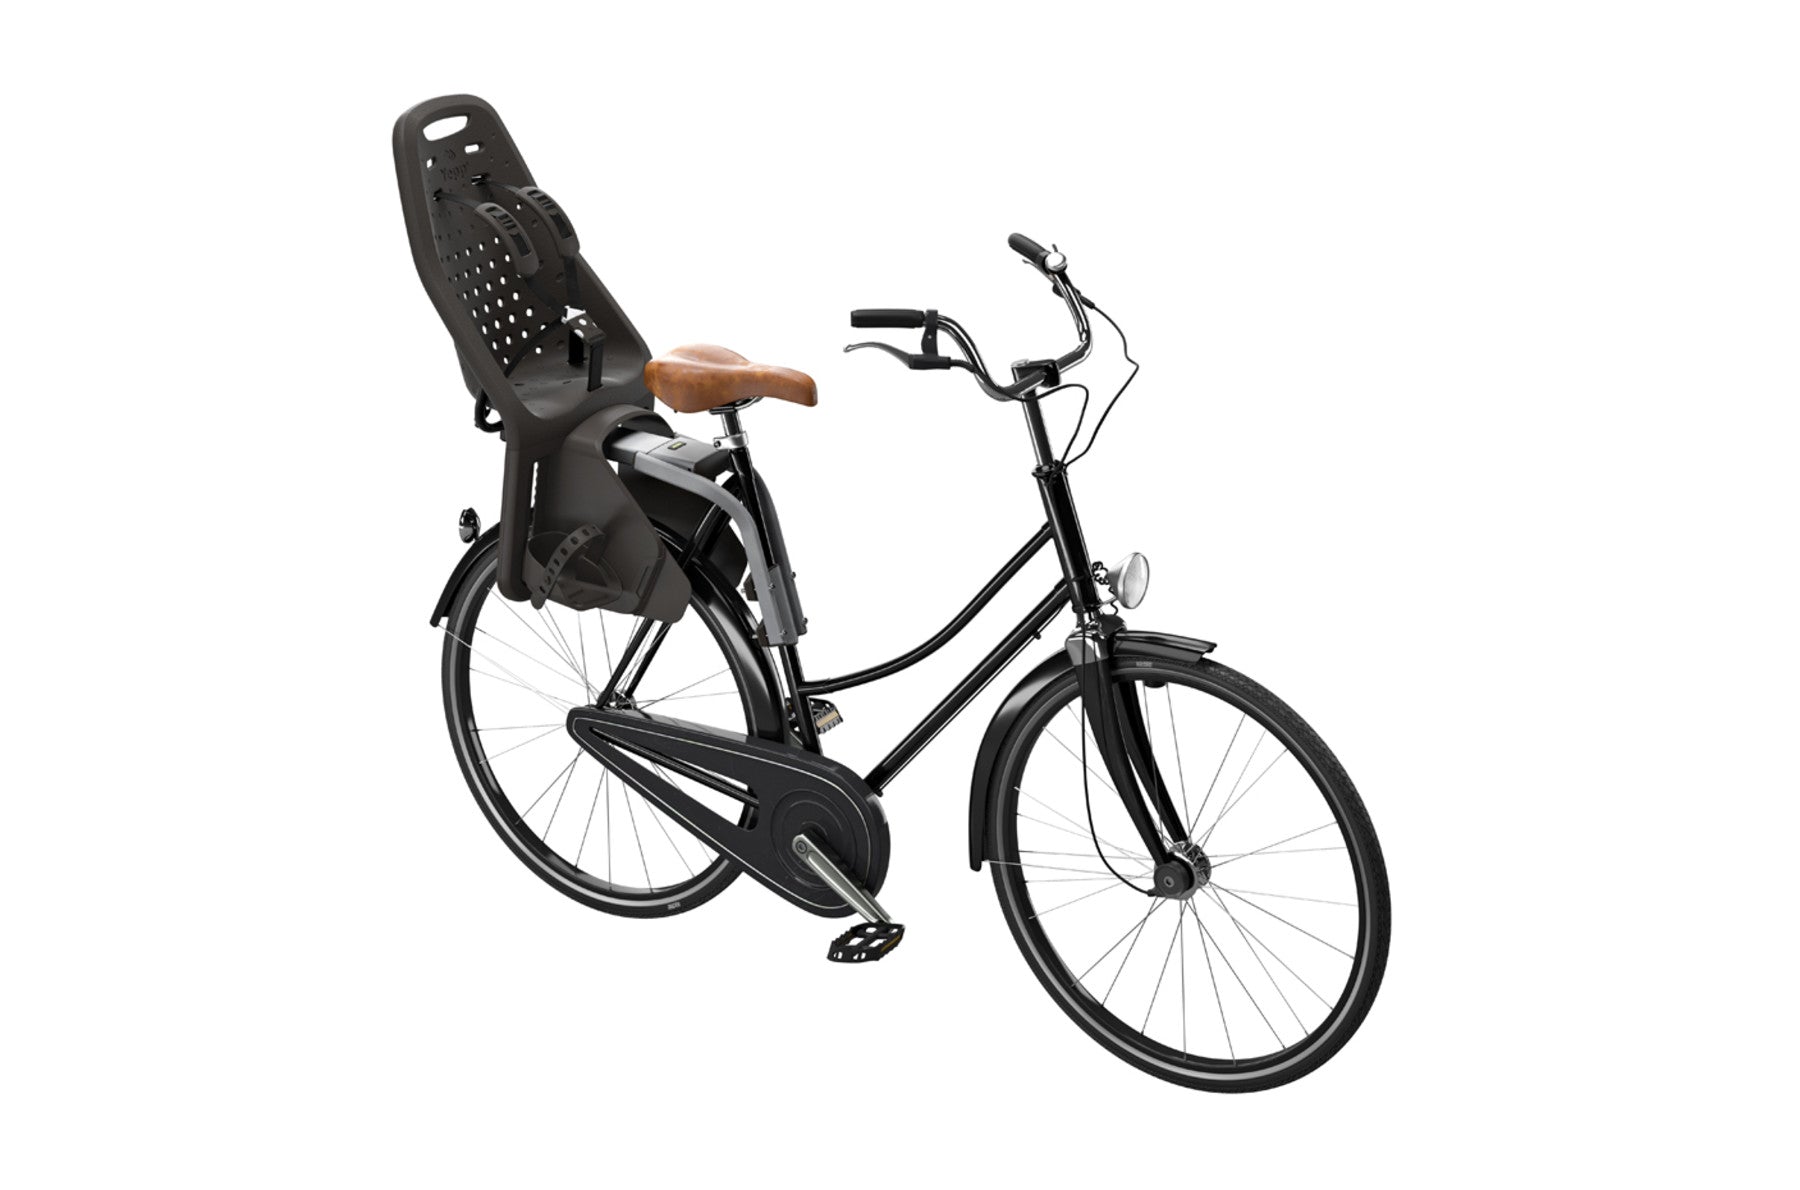 THULE Yepp Maxi Frame Mount Child Bike Seat - ANB Baby -$100 - $300